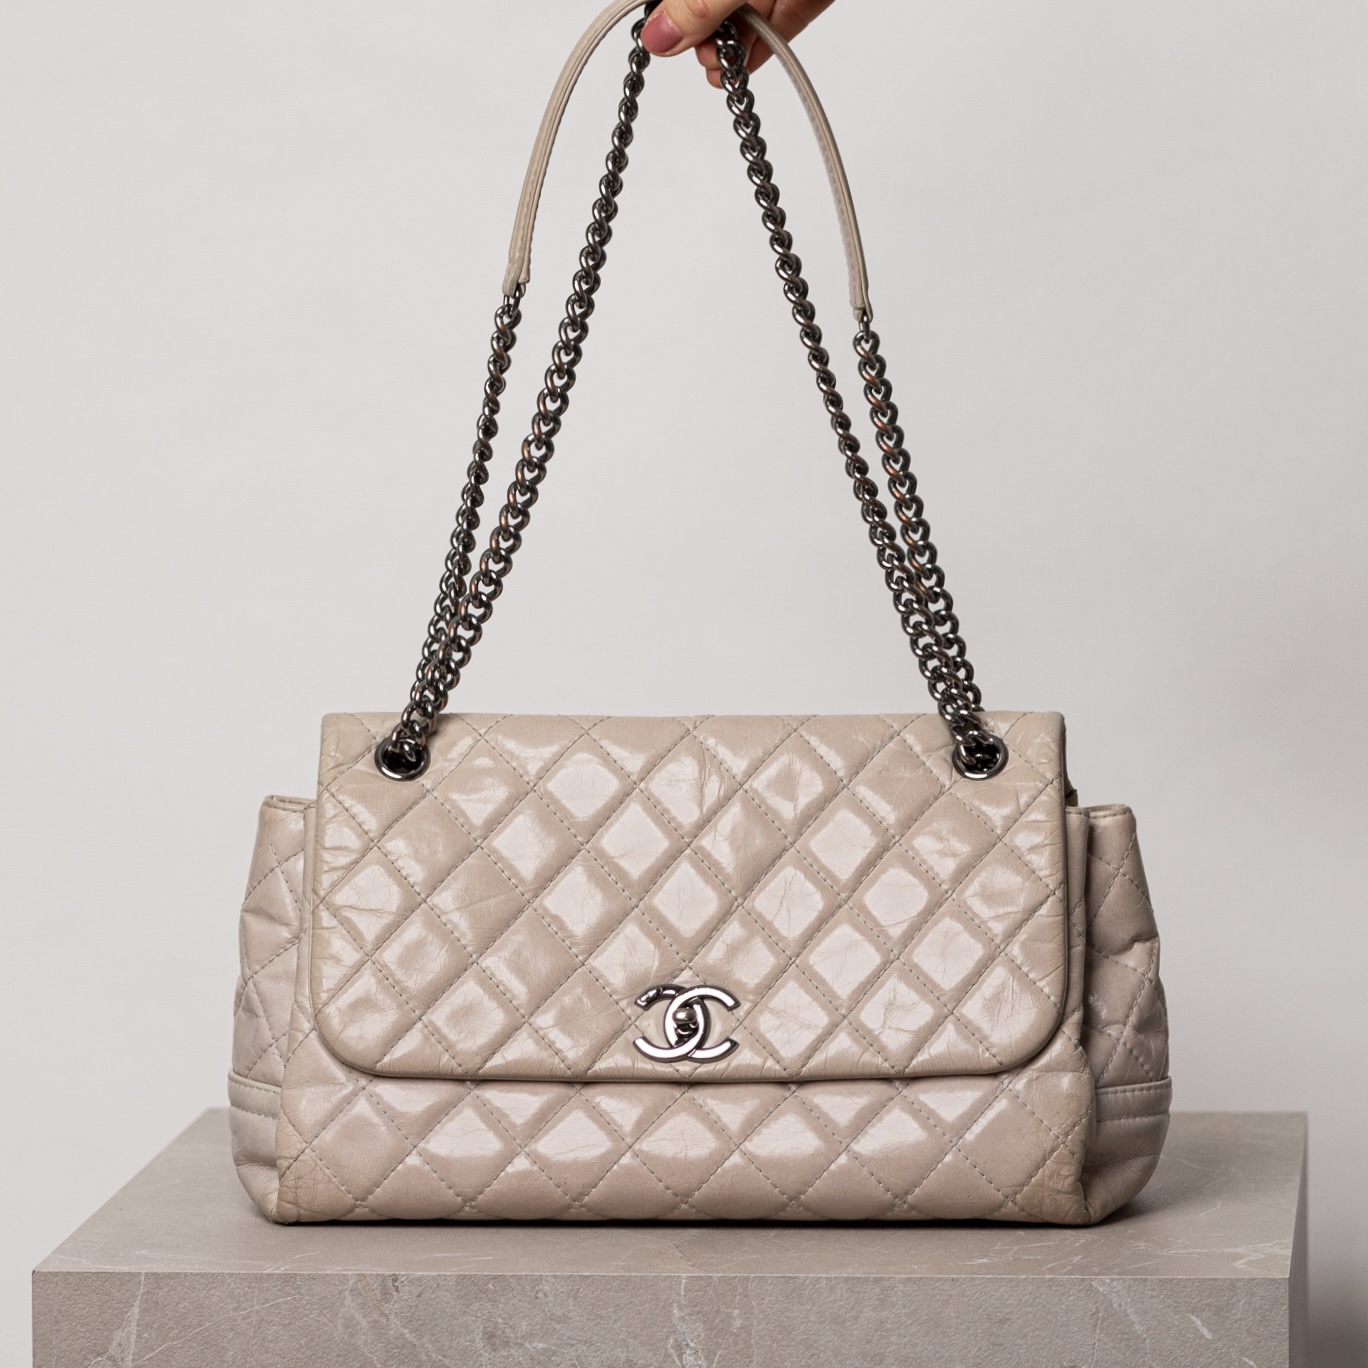 Chanel Single Flap Bag Tasche Calfksin Greige